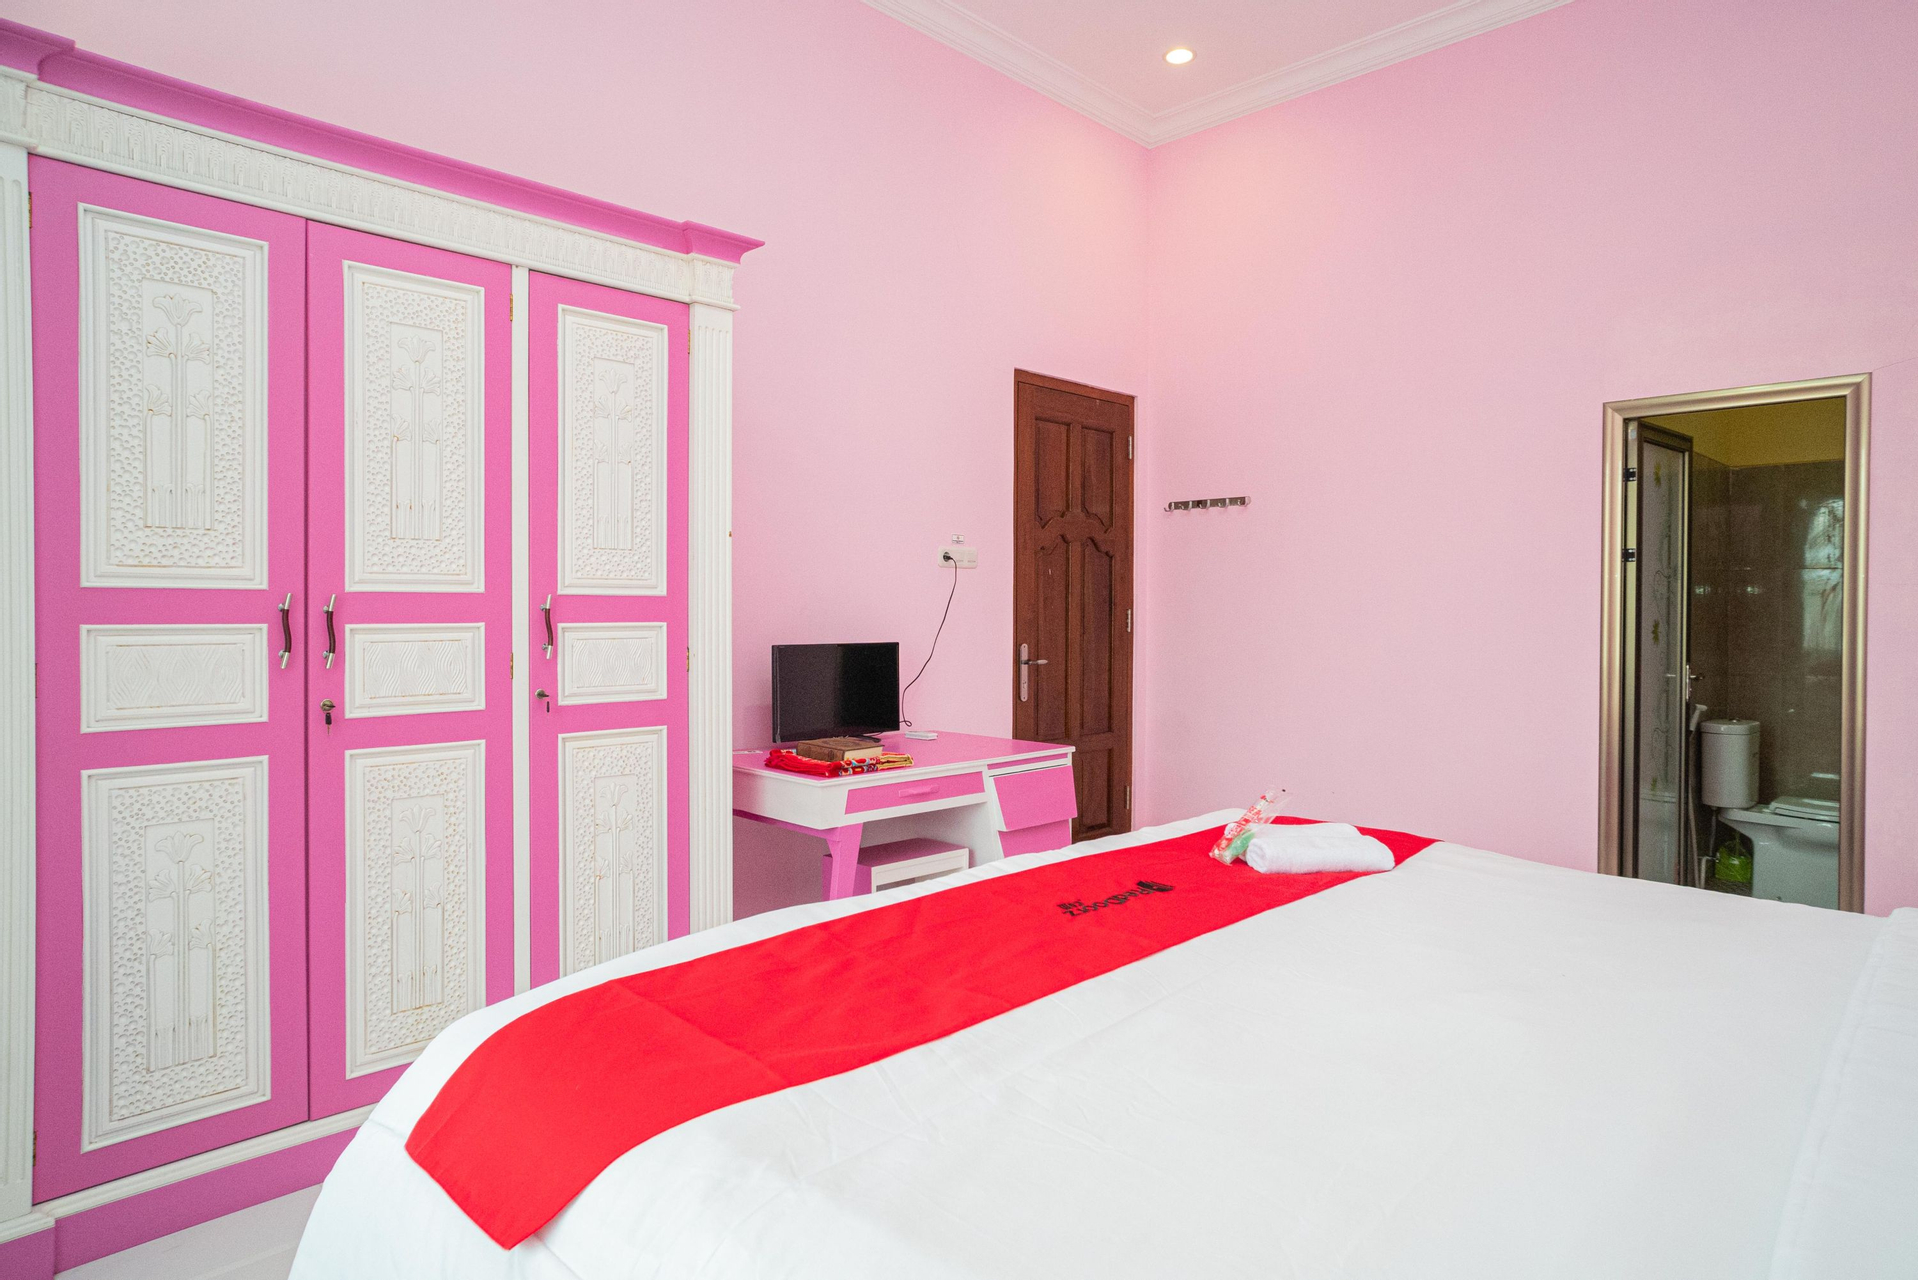 Bedroom 3, RedDoorz Syariah near RSUD Kota Malang, Malang